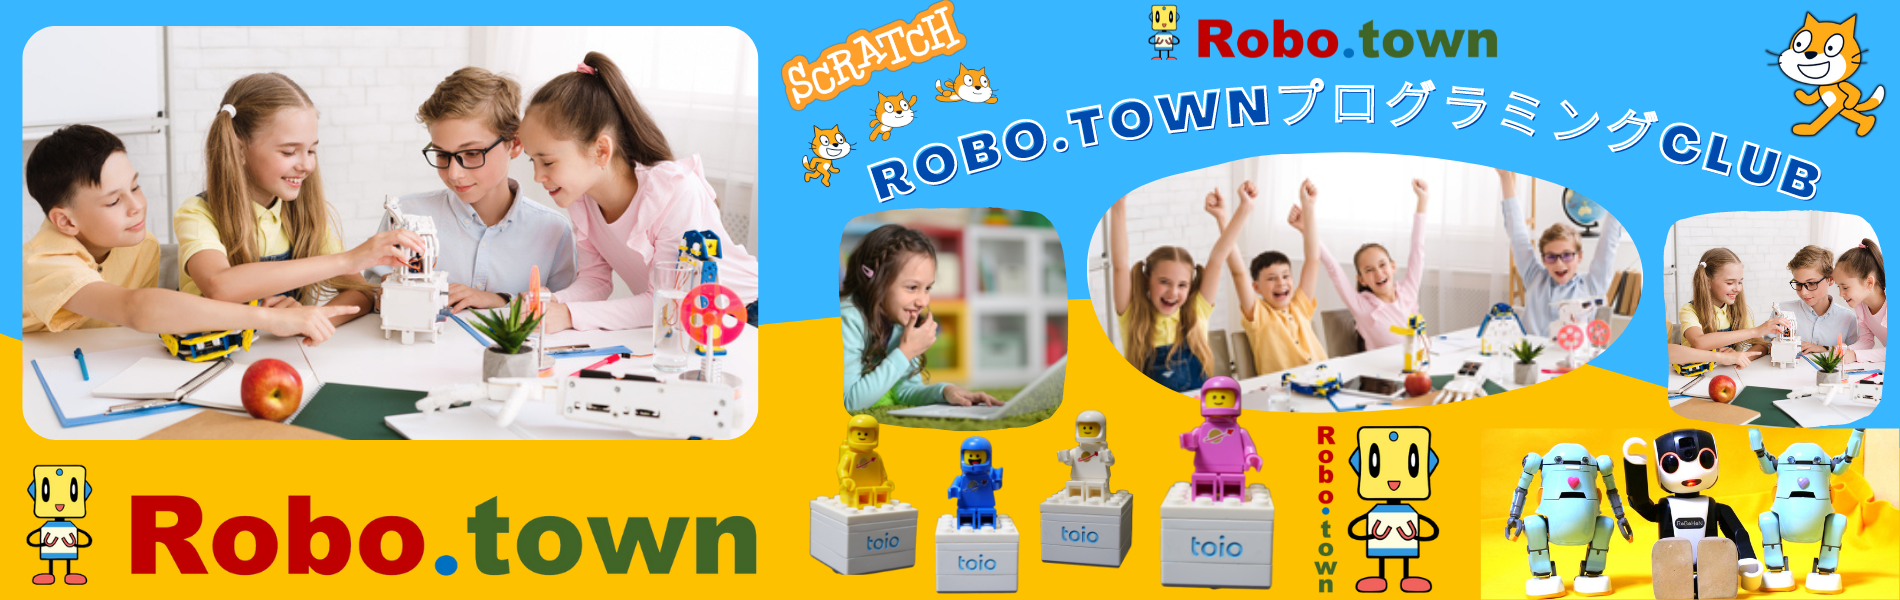 Robo.town プログラミング Club